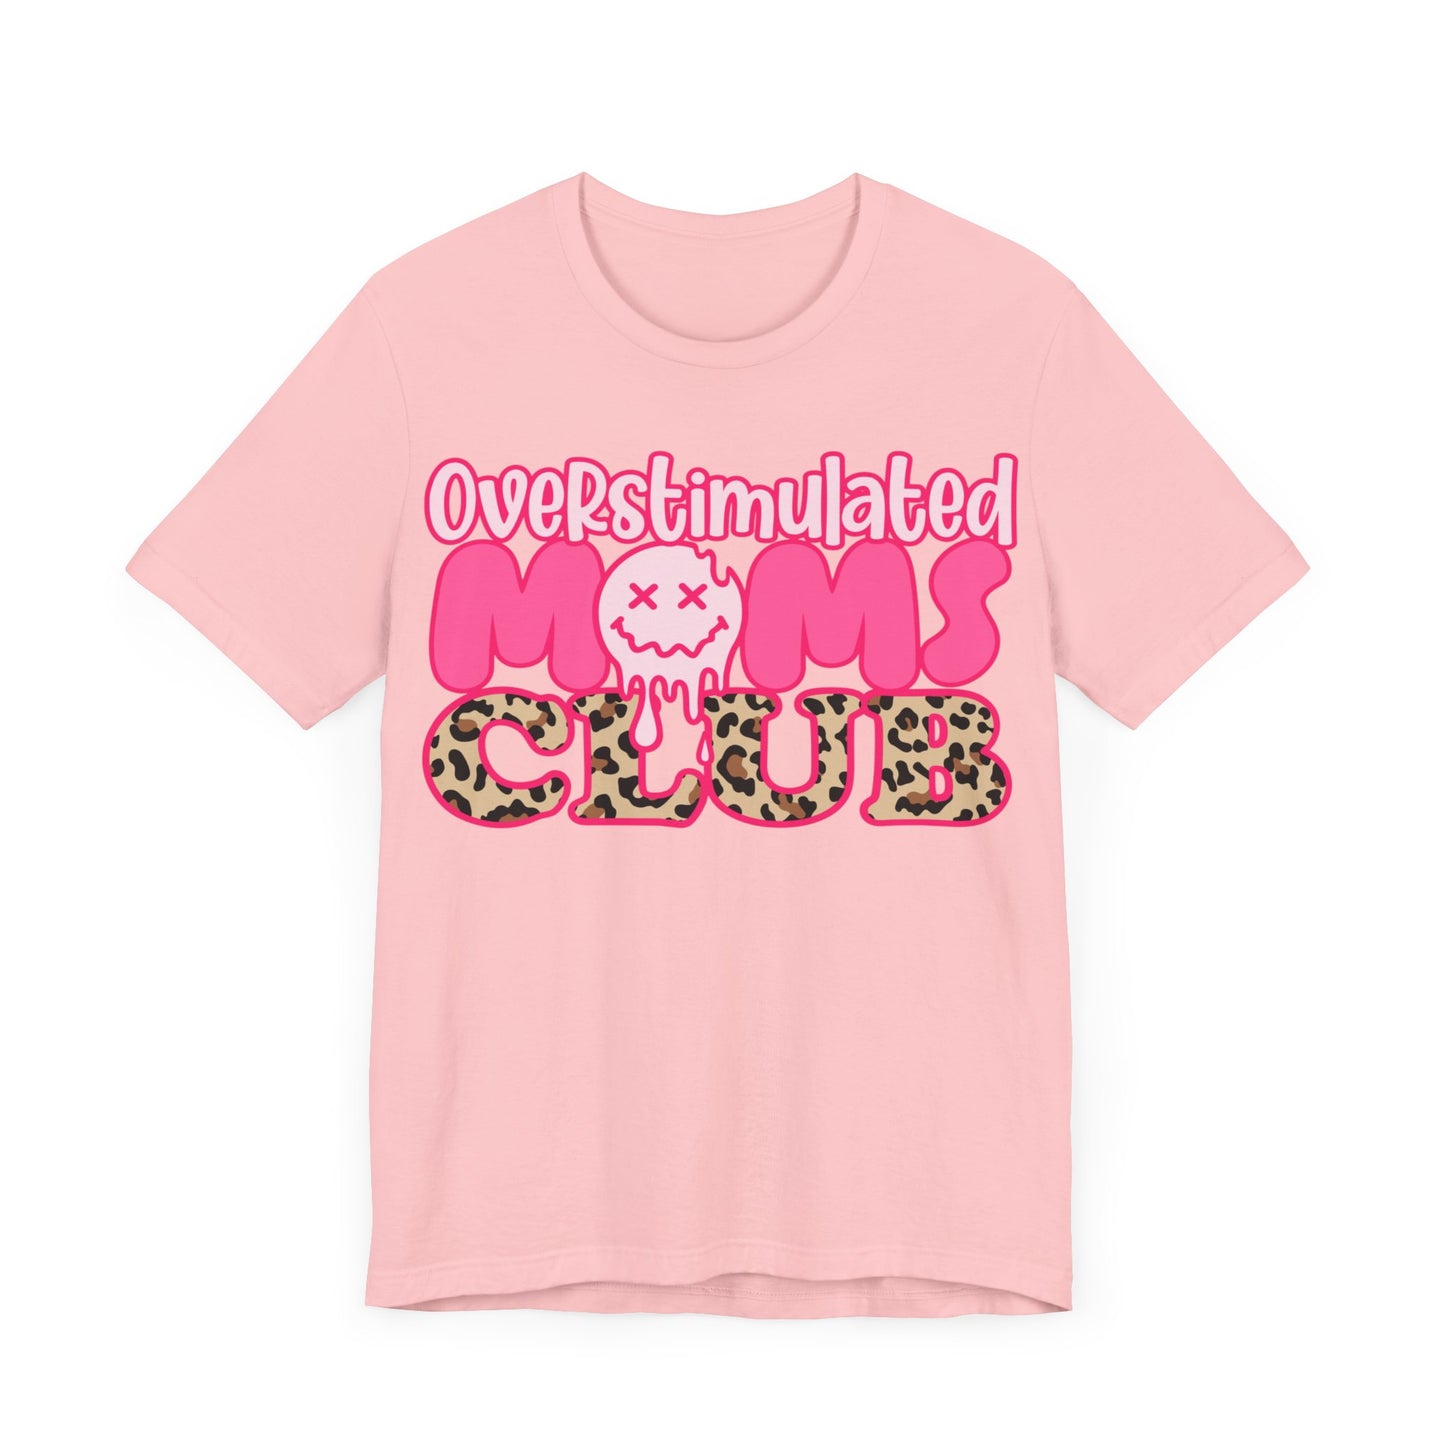 Overstimulated Moms Club Shirt, Happy Mother's Day Gift, Nana Shirt, Mom Shirt, Funny Mom Tshirt, Mama Shirt